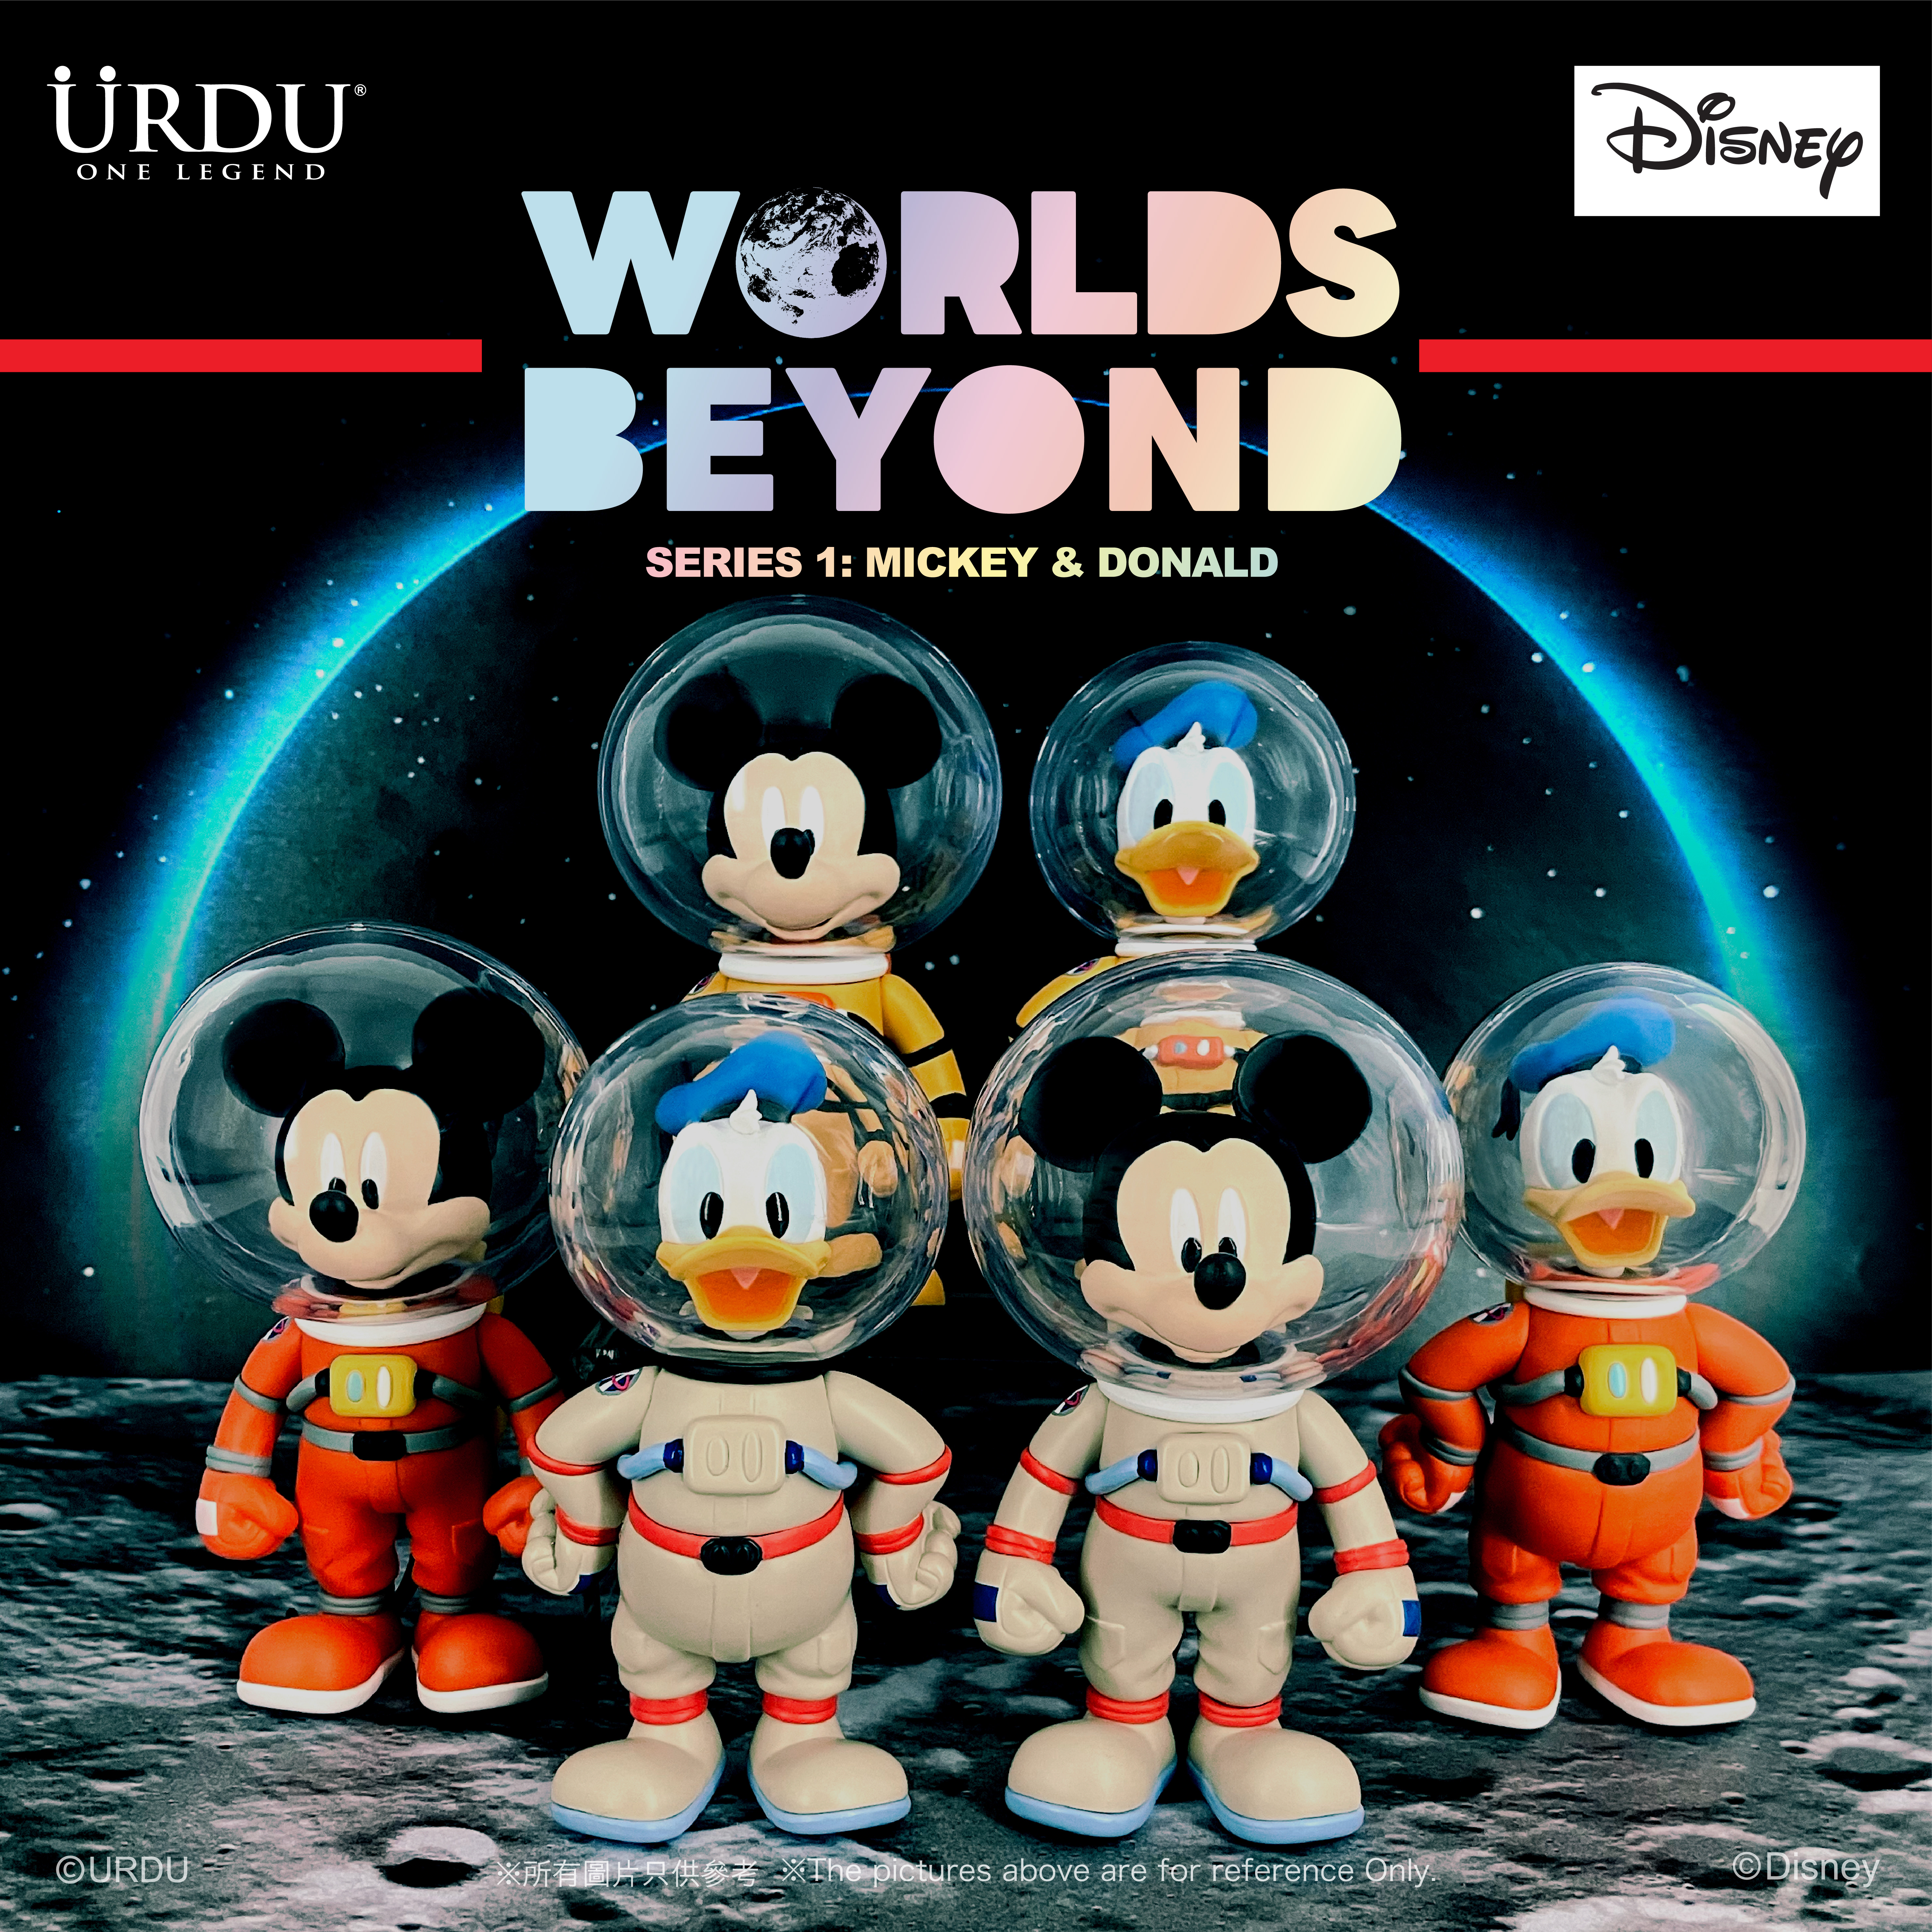 URDU_Disney_Worlds_Beyond_SNS-01.jpg